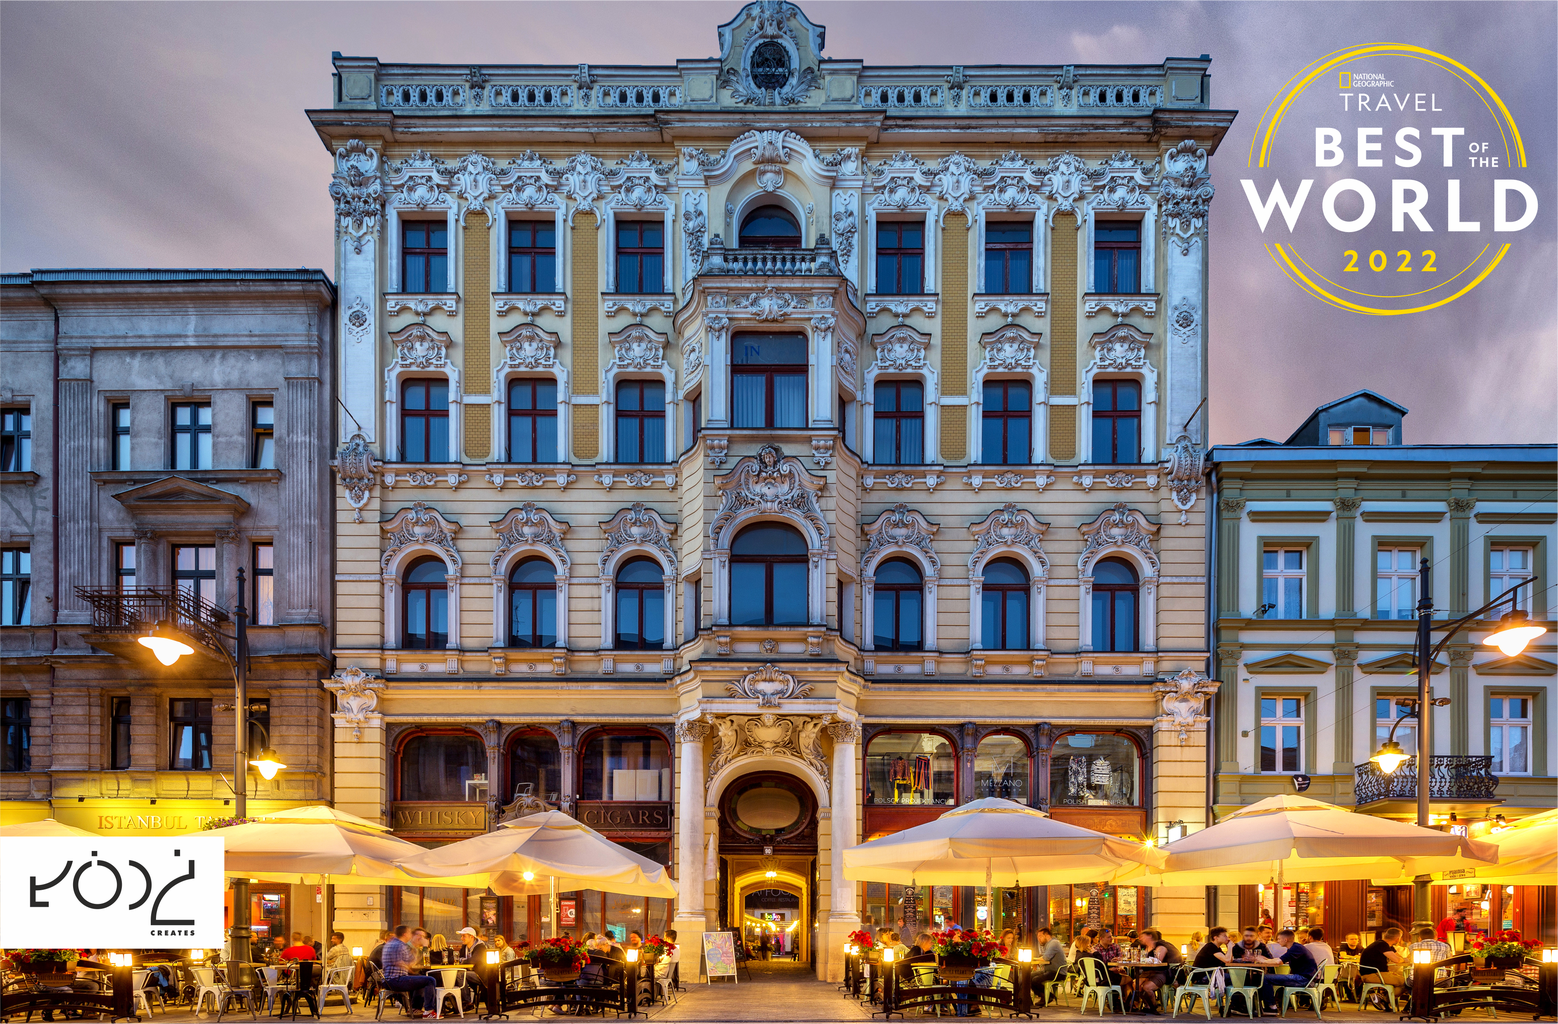 Łódź als enige Poolse stad op de „Best Of The World 2022” lijst van National Geographic